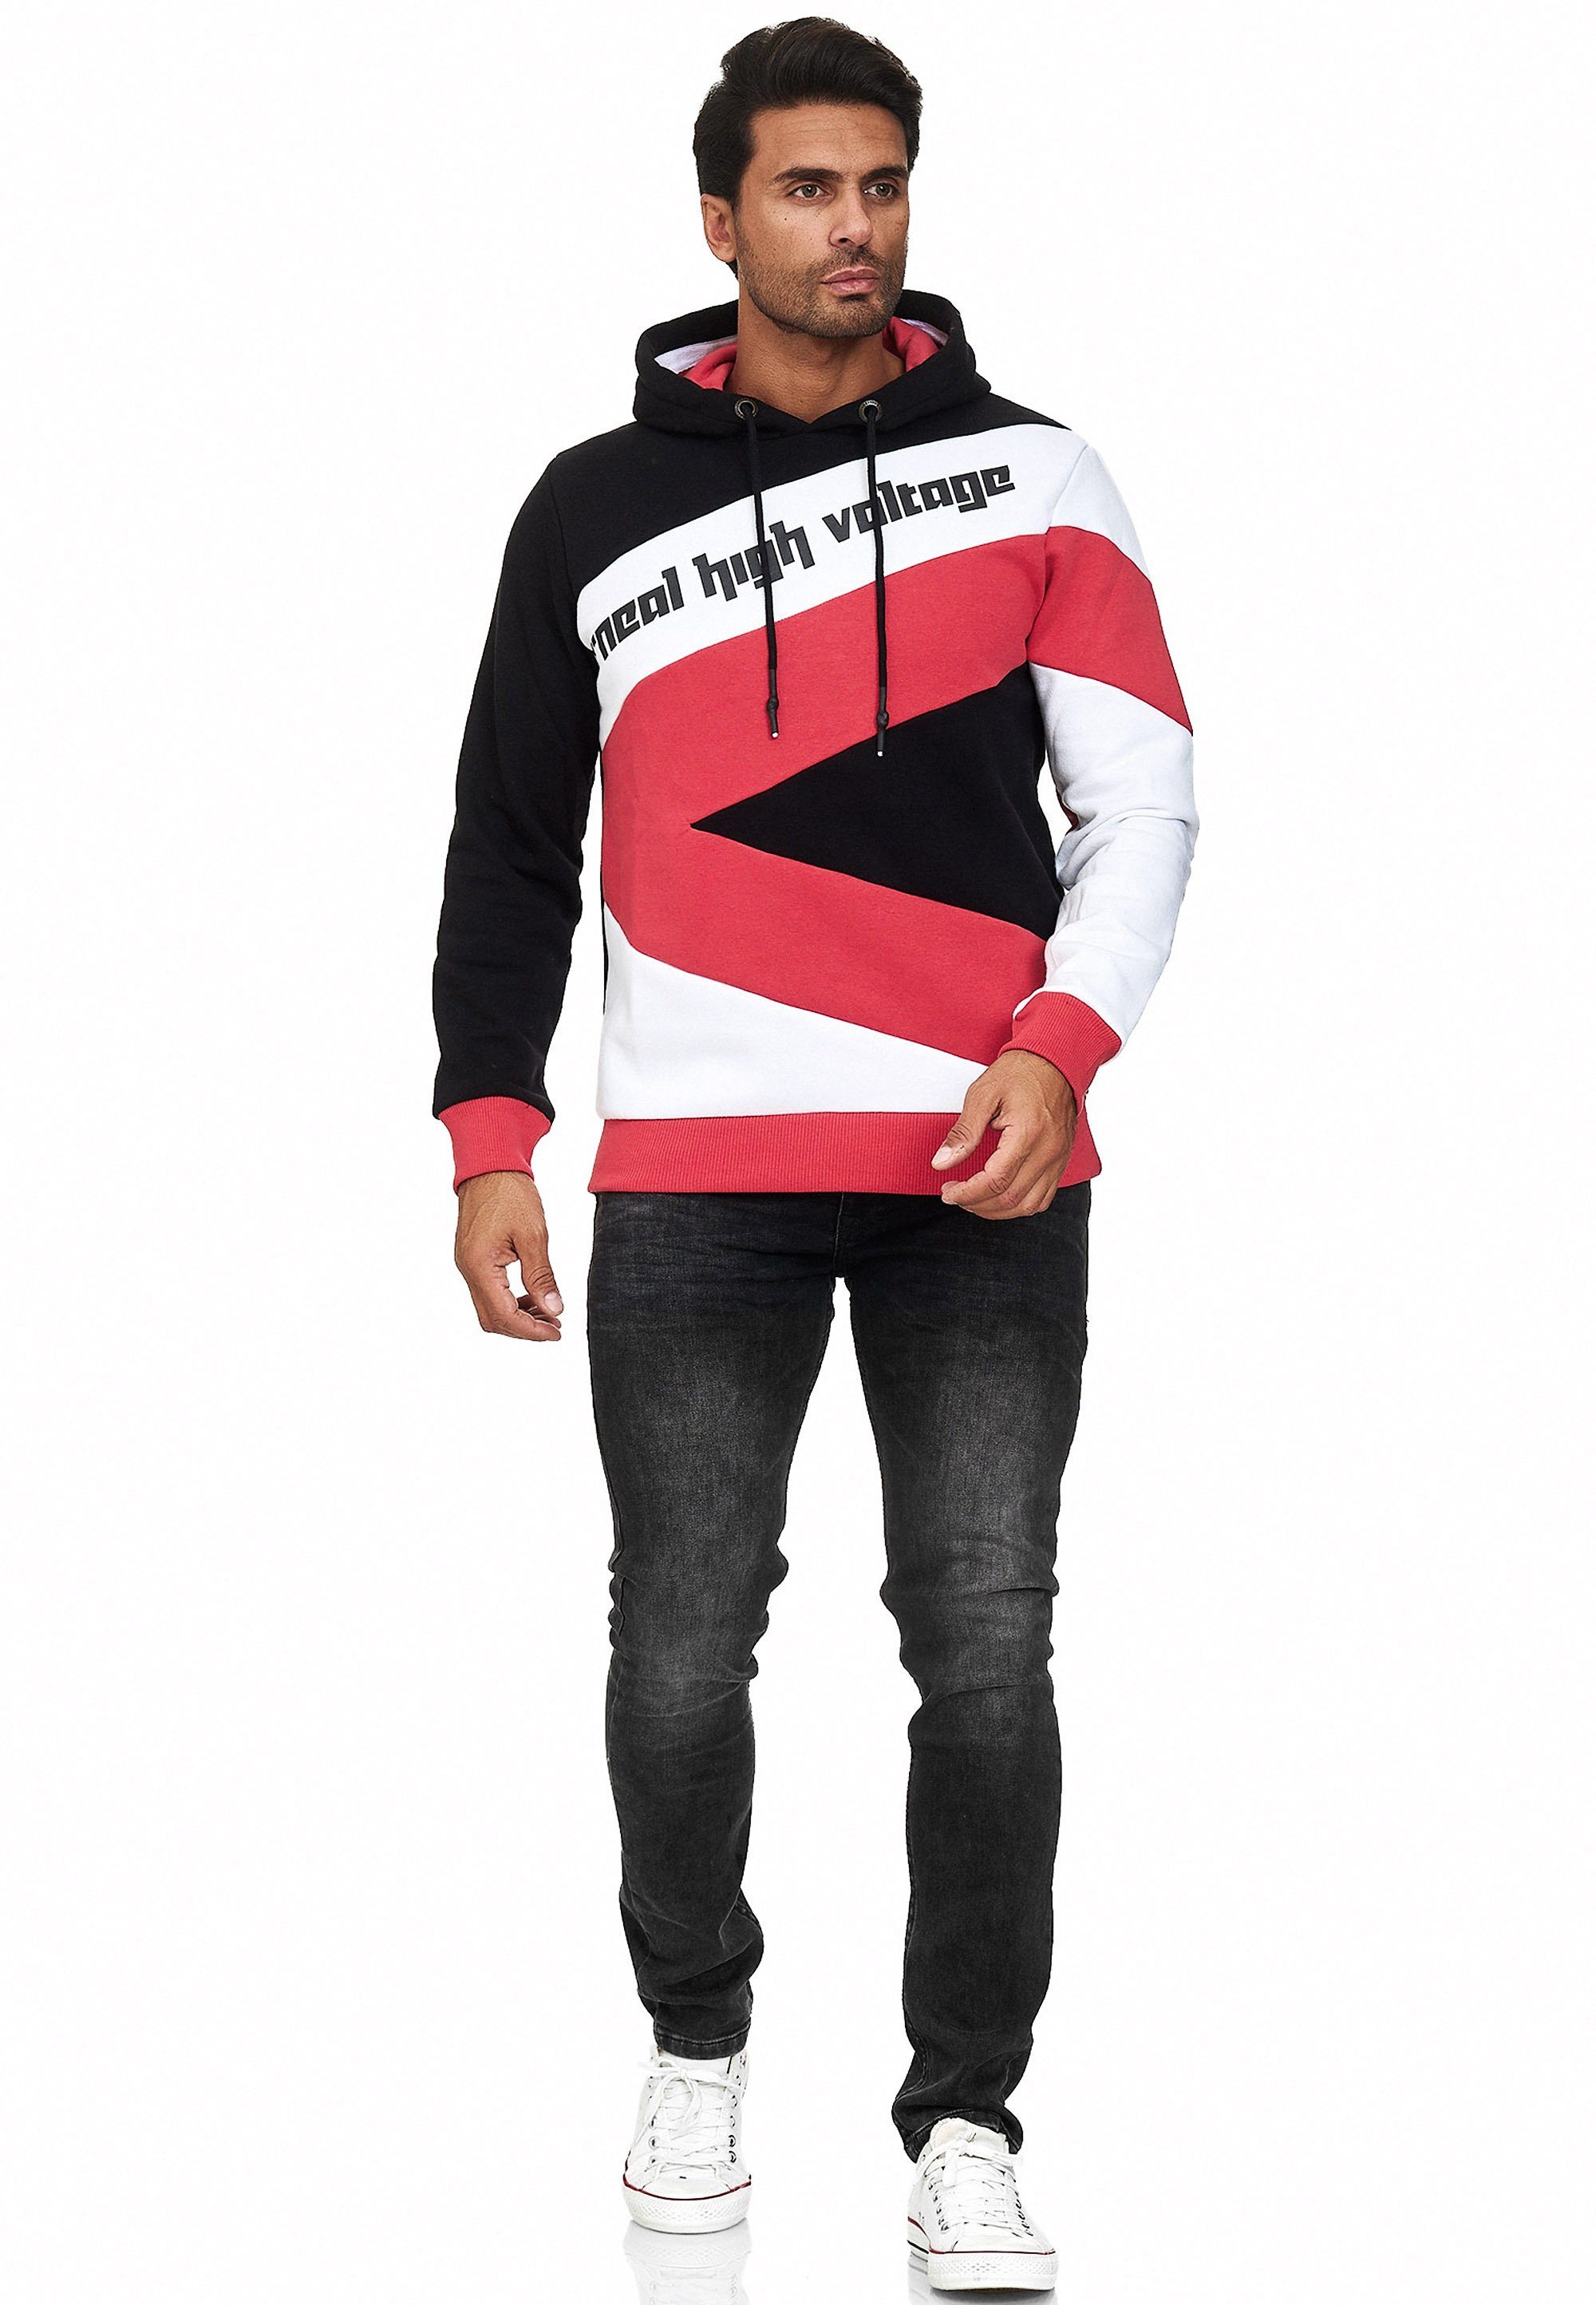 Rusty Neal Kapuzensweatshirt in sportlichem schwarz-rot Design